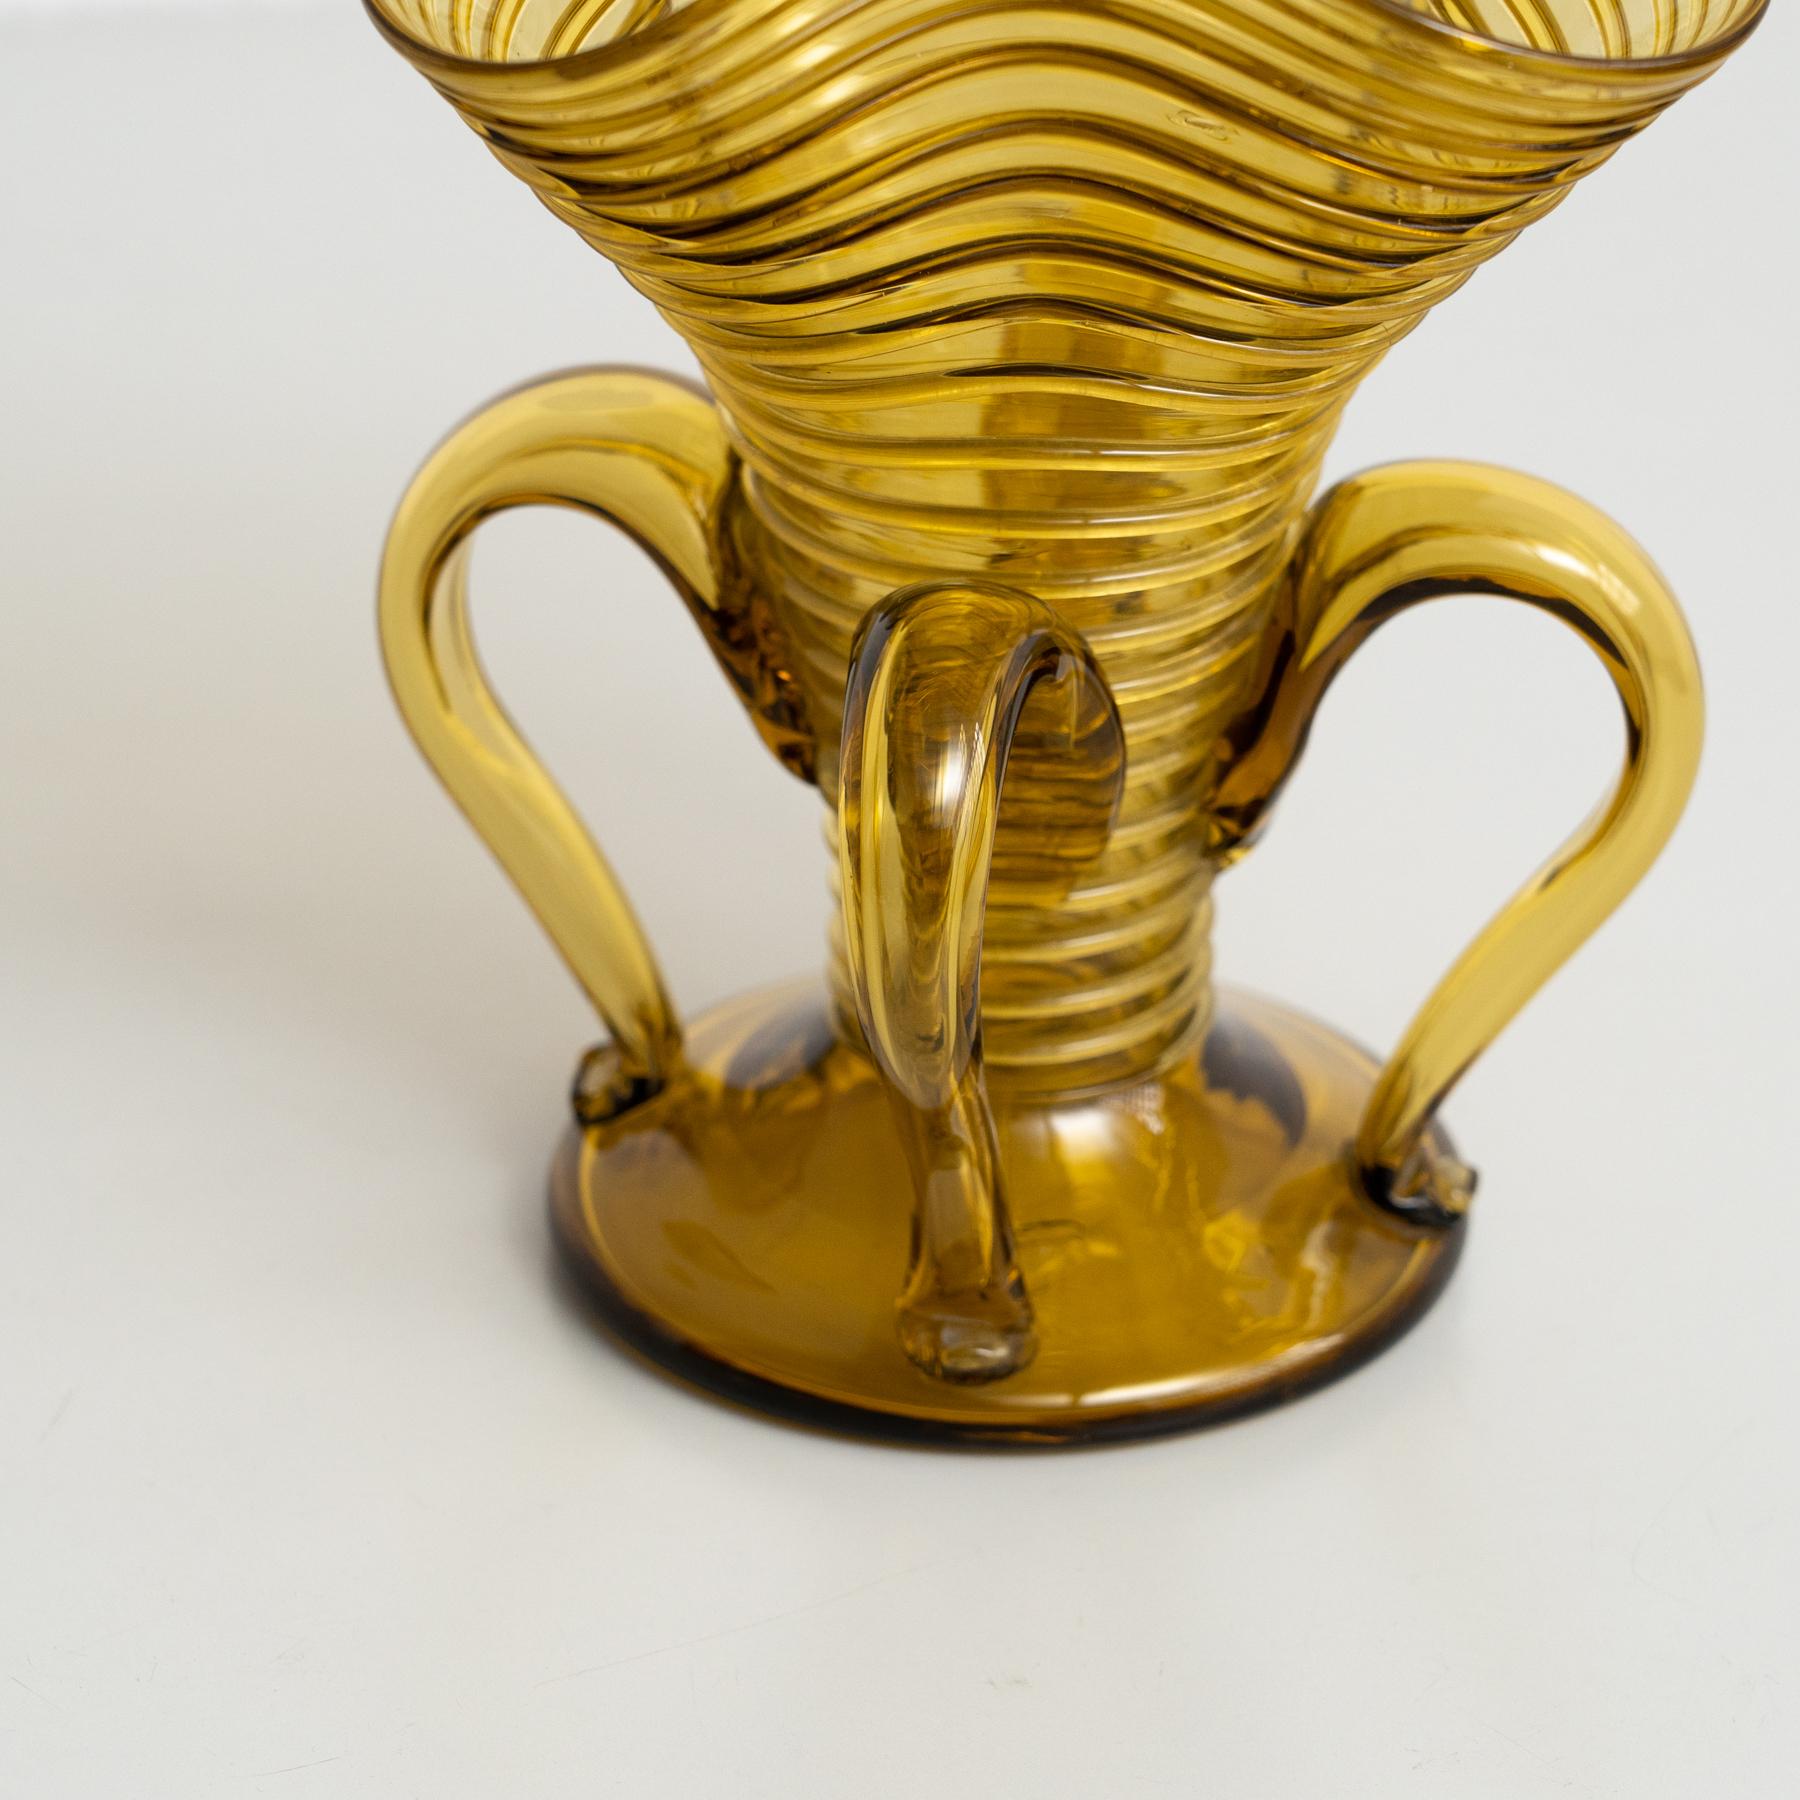 Elegant Amber Blown Glass Vase - Early 20th Century Spanish Artistry For Sale 2